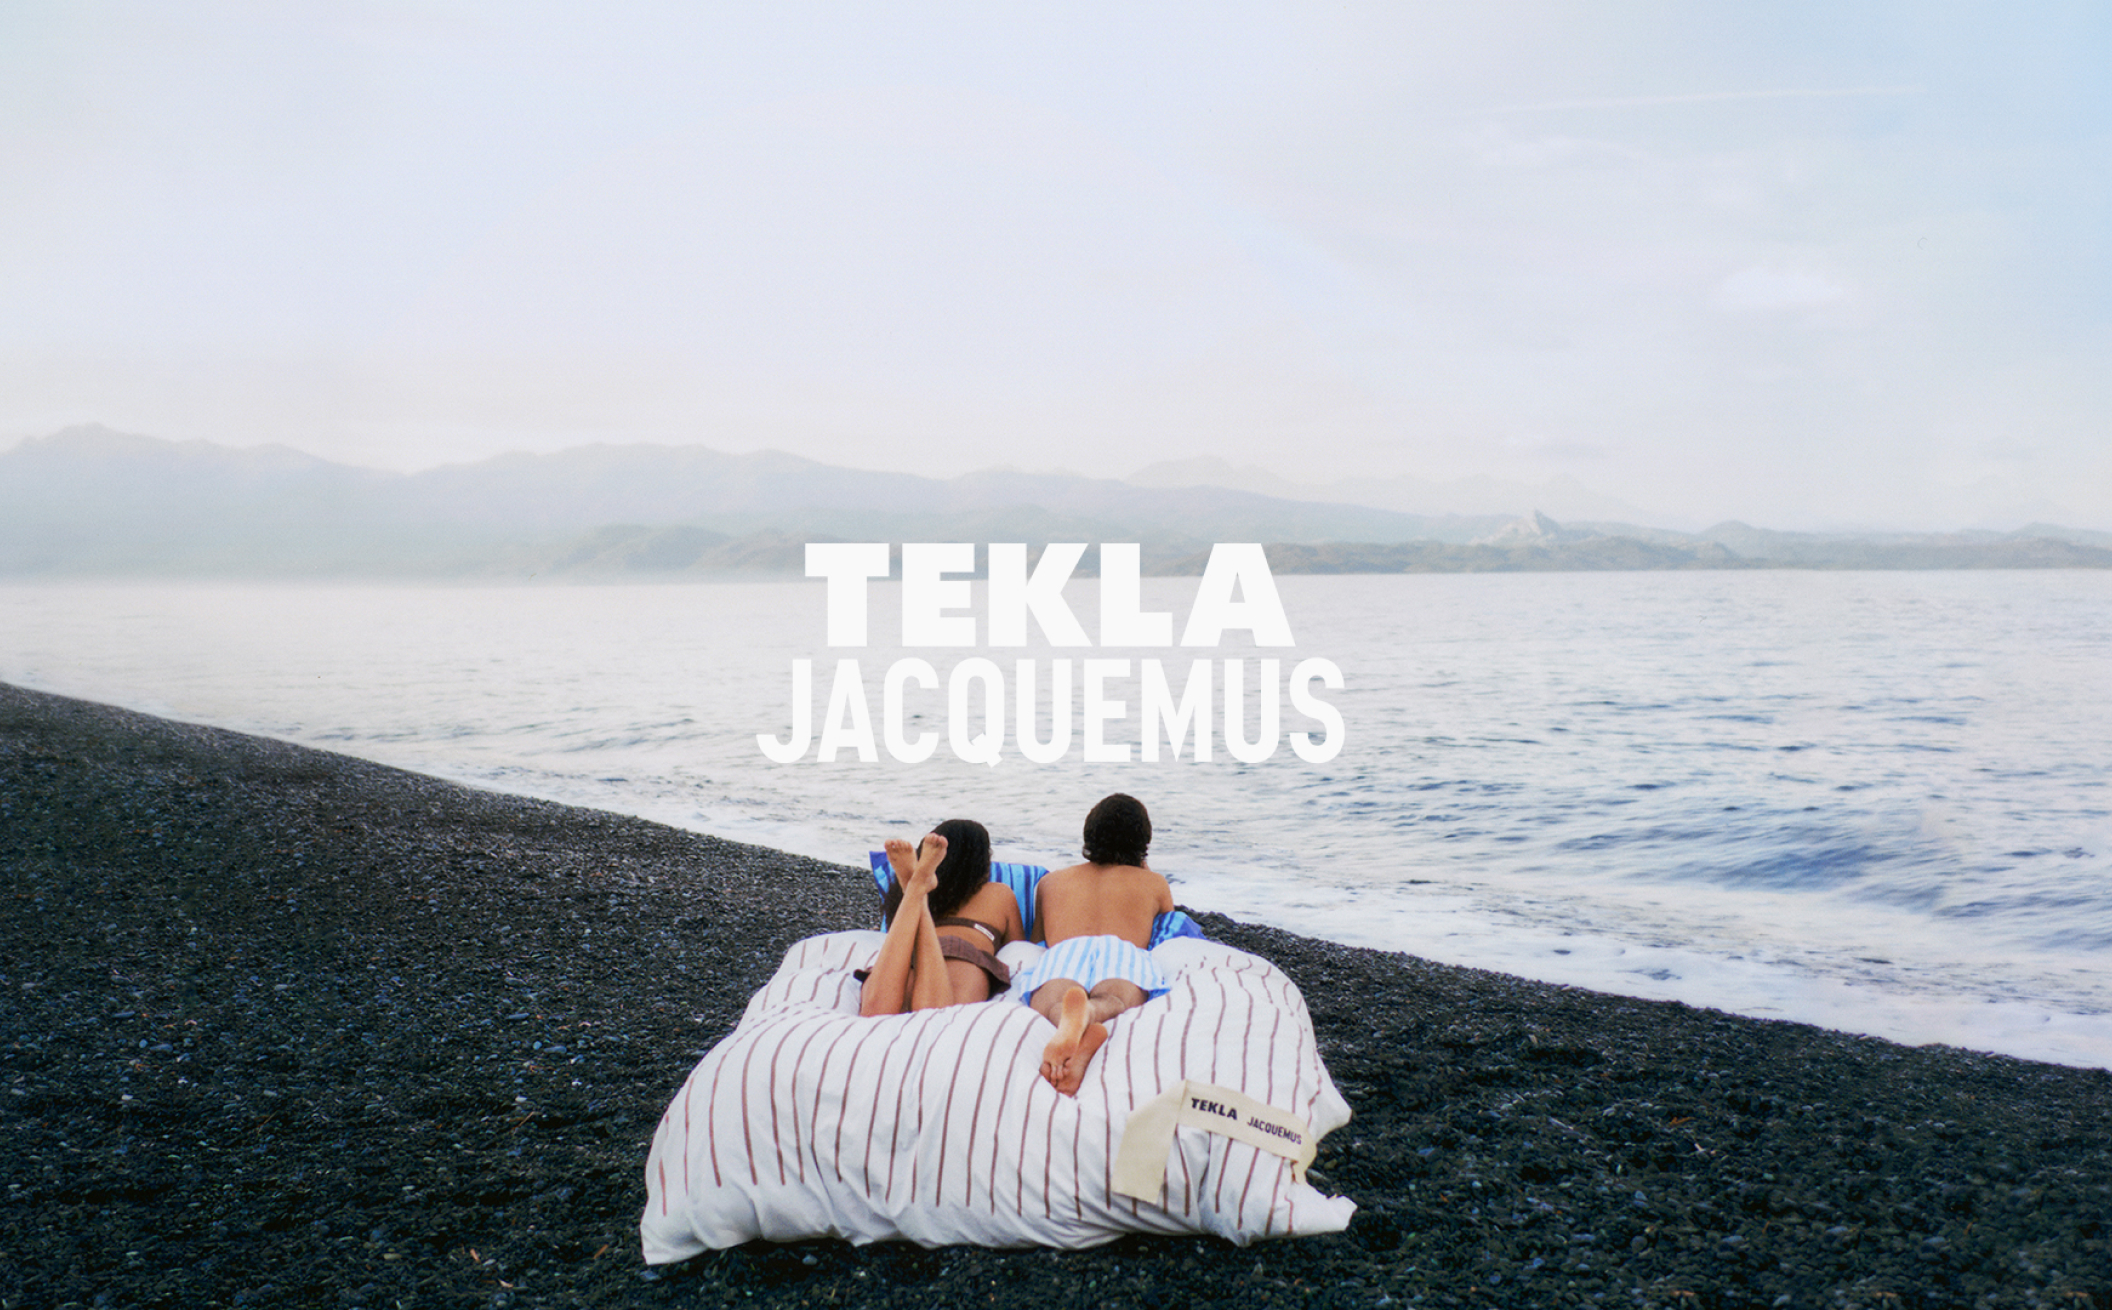 Jacquemus / Tekla | Tekla Fabrics